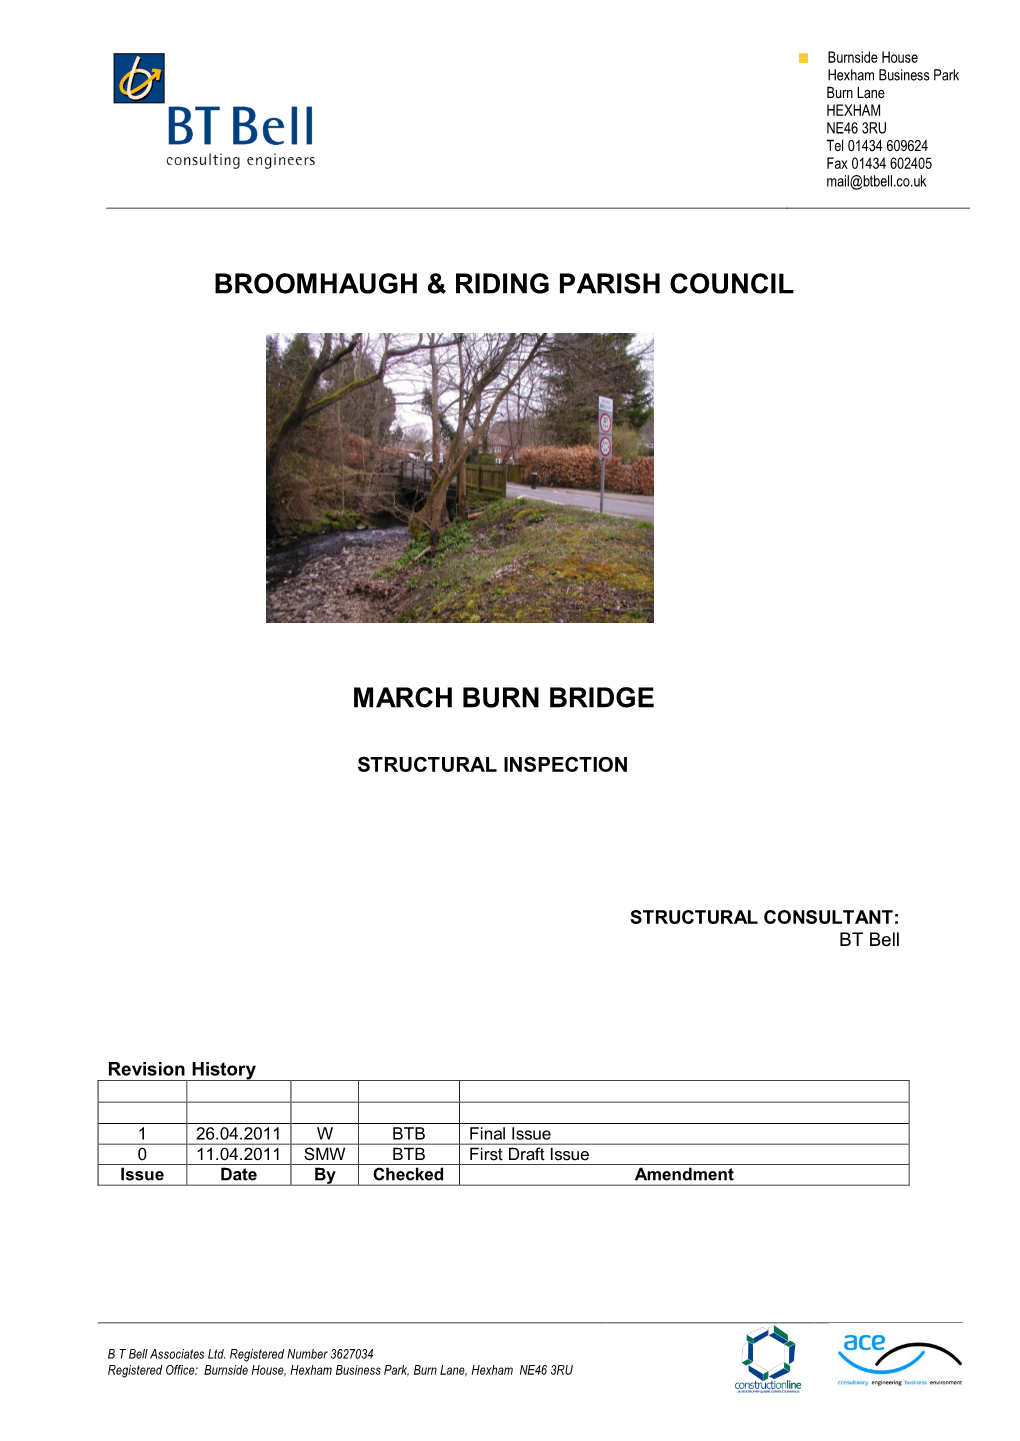 Broomhaugh & Riding Parish Council March Burn Bridge